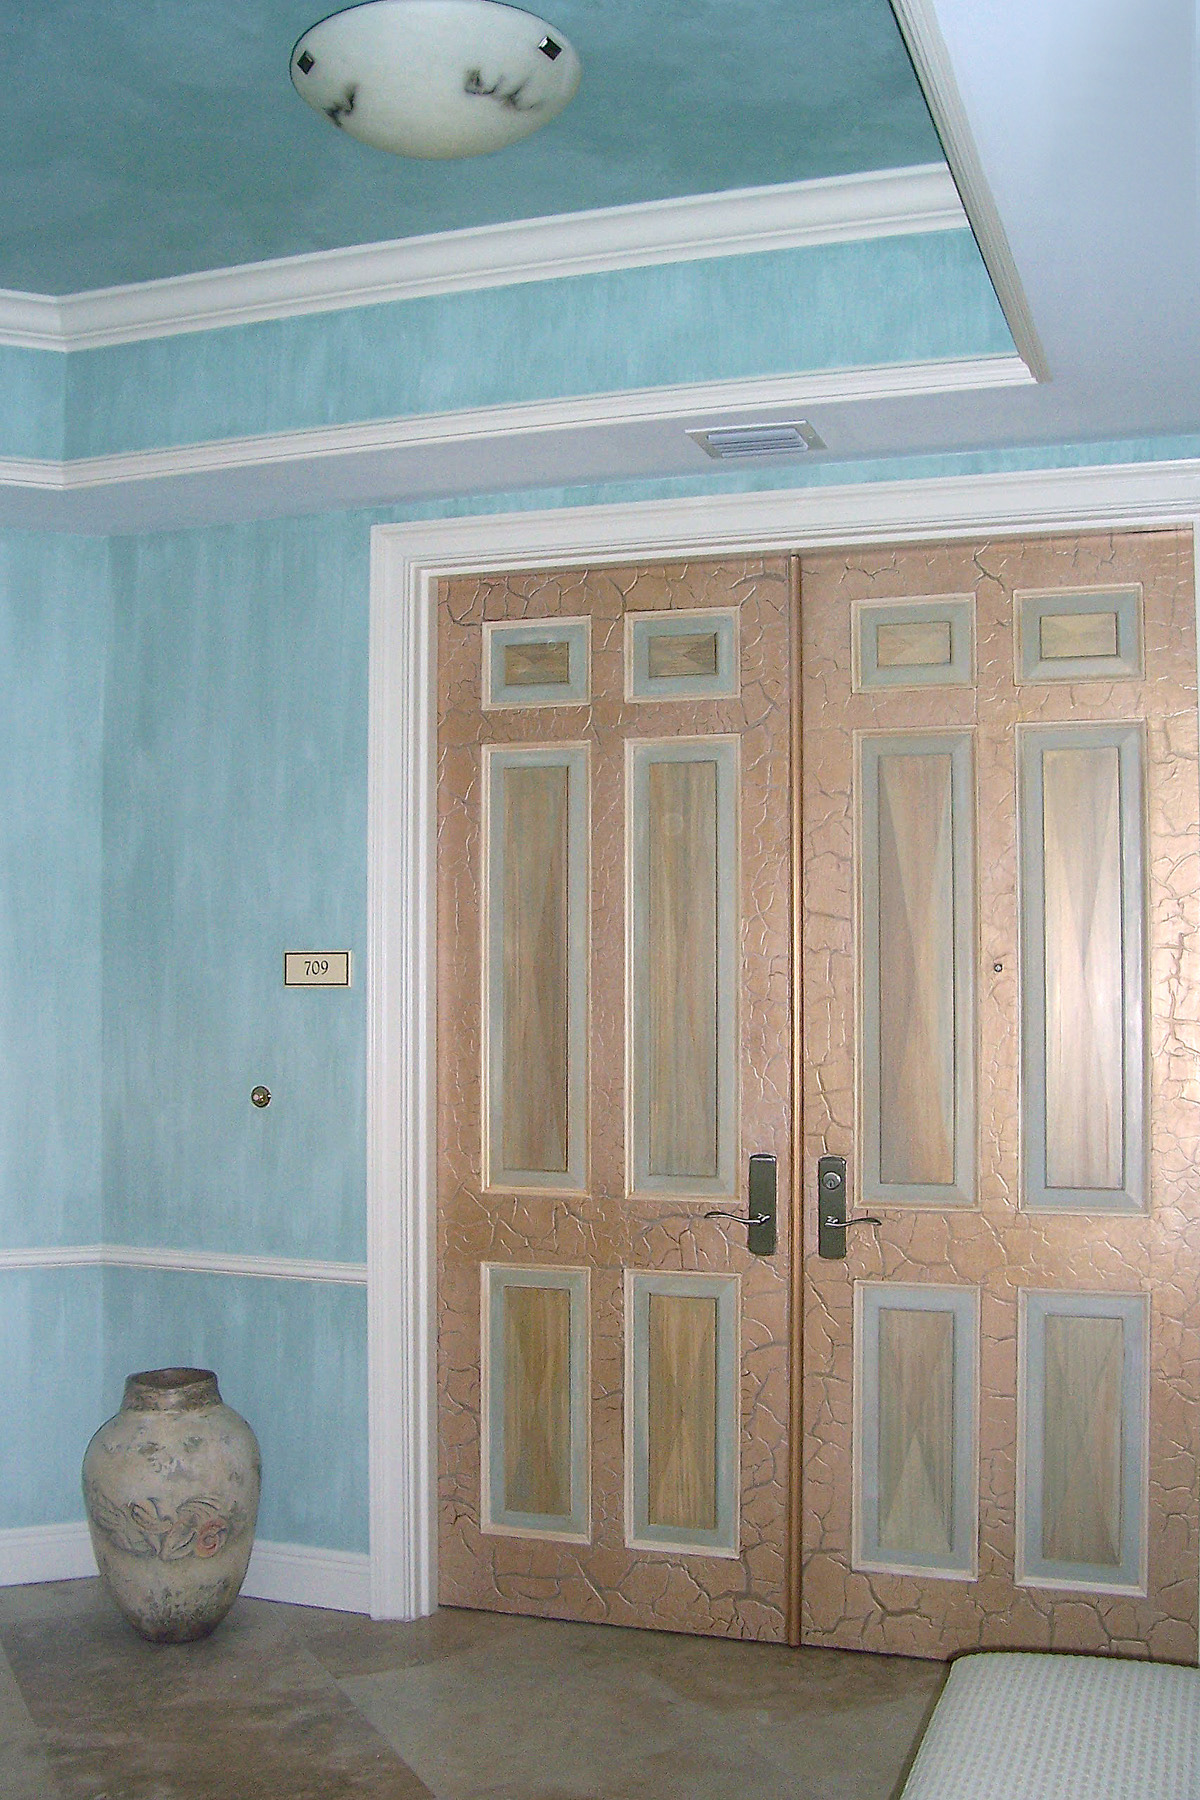 door faux Mural airbrush diamond  Marble glaze crusty plaster plaster striay elevator elevator door ceiling decorative painting